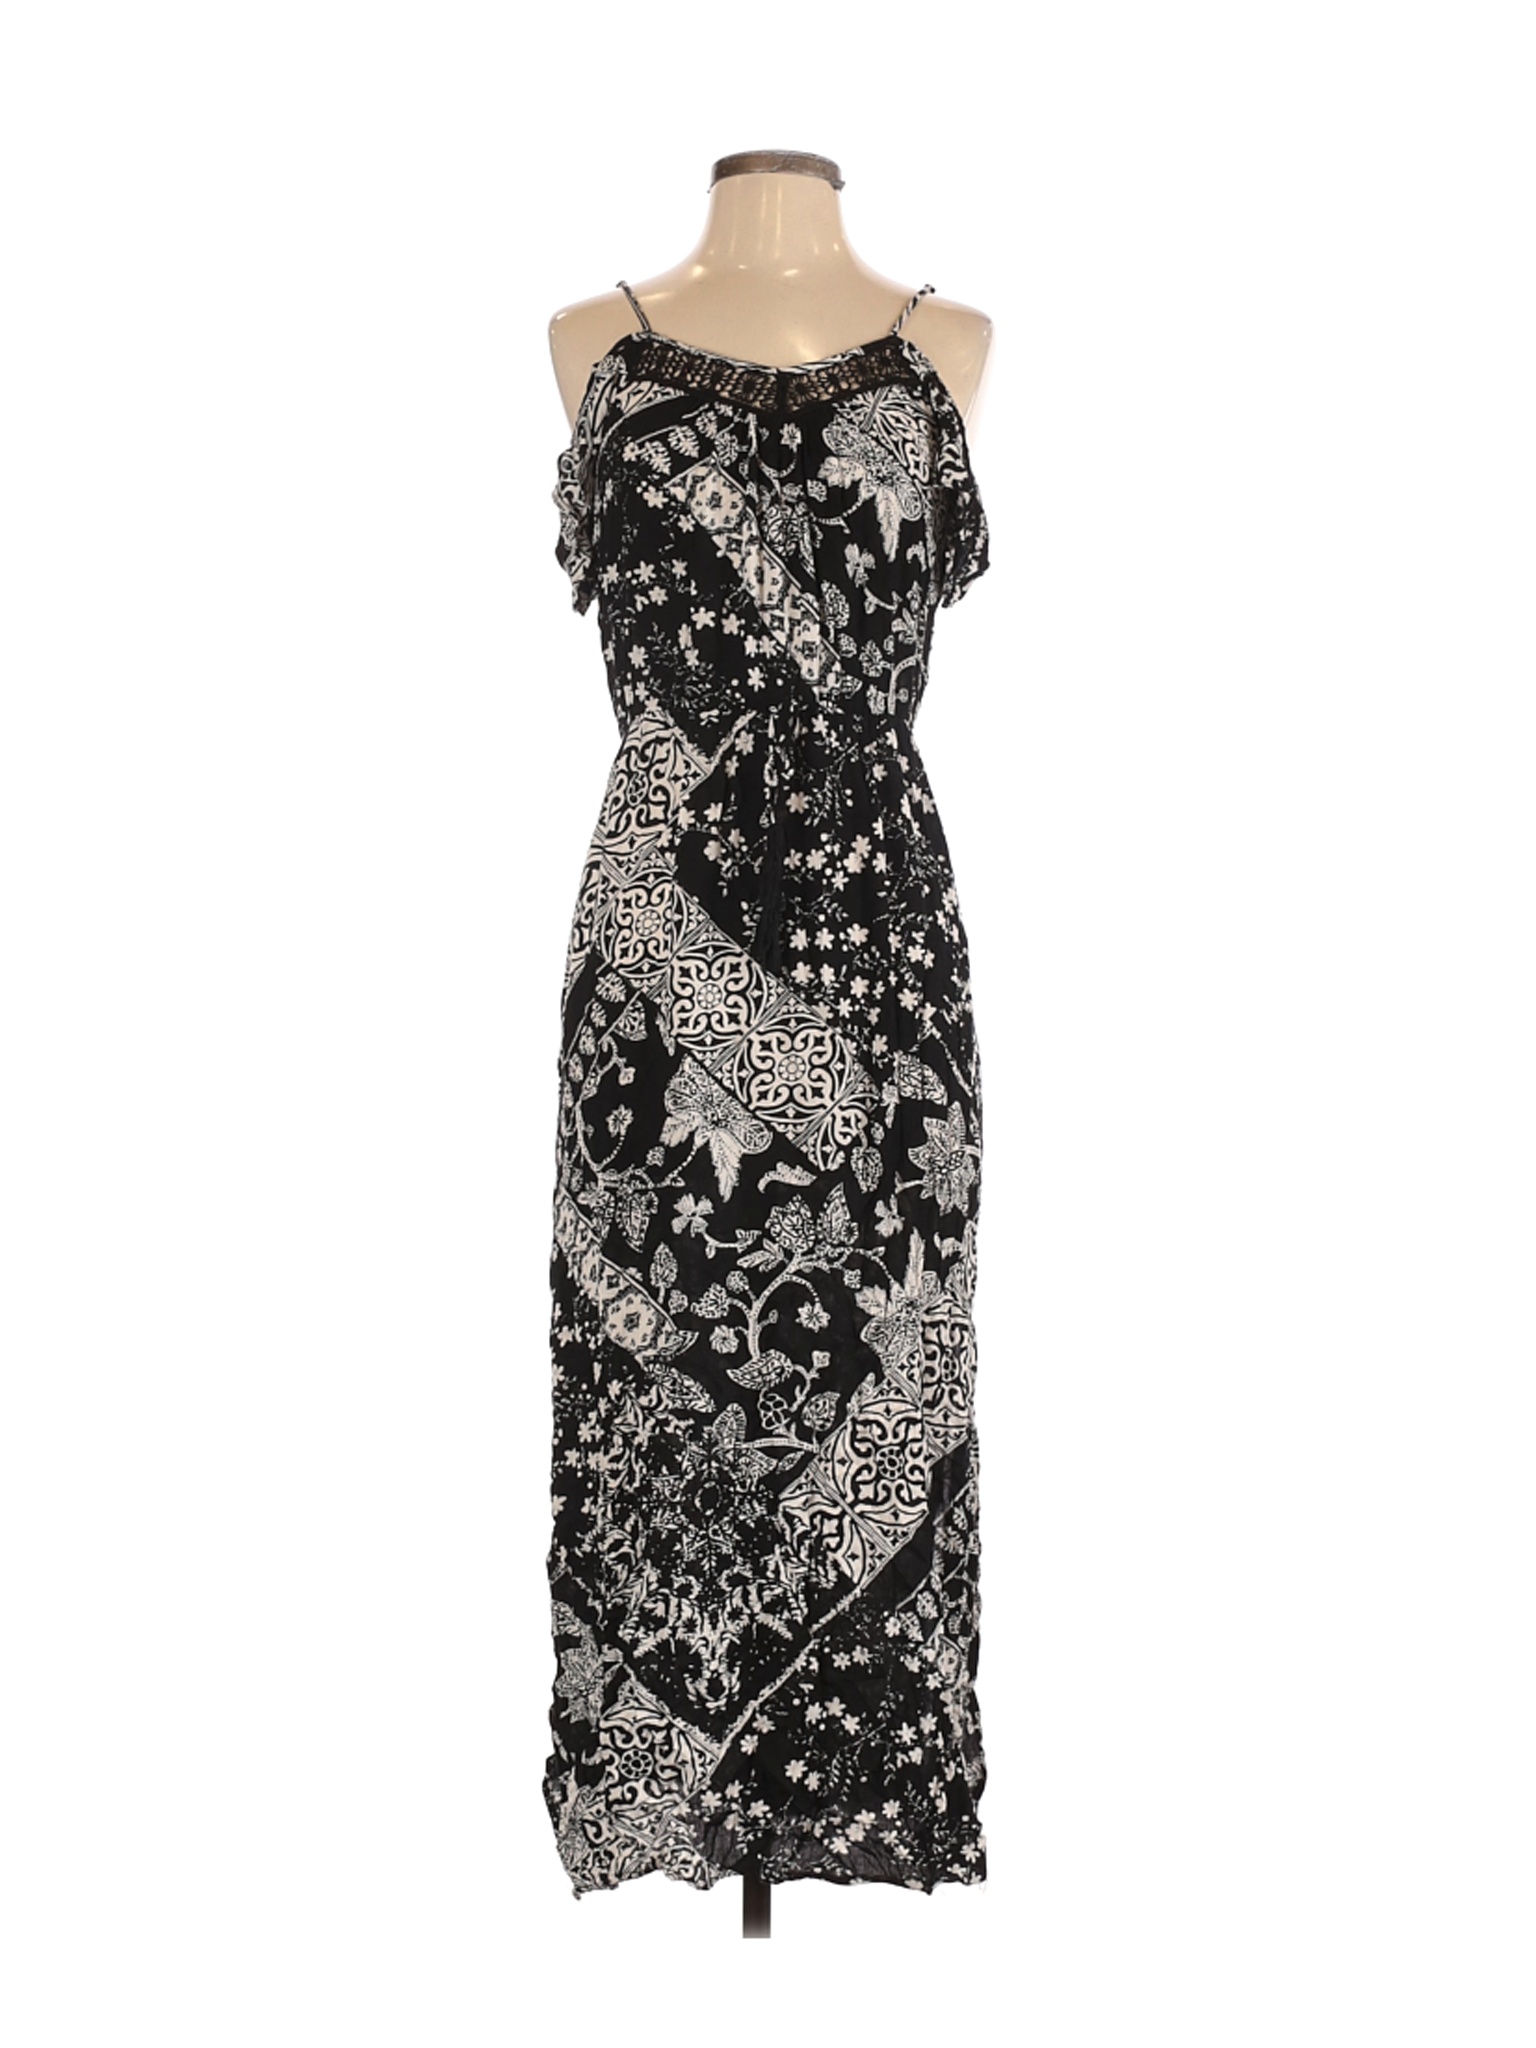 Xhilaration Women Black Casual Dress M | eBay